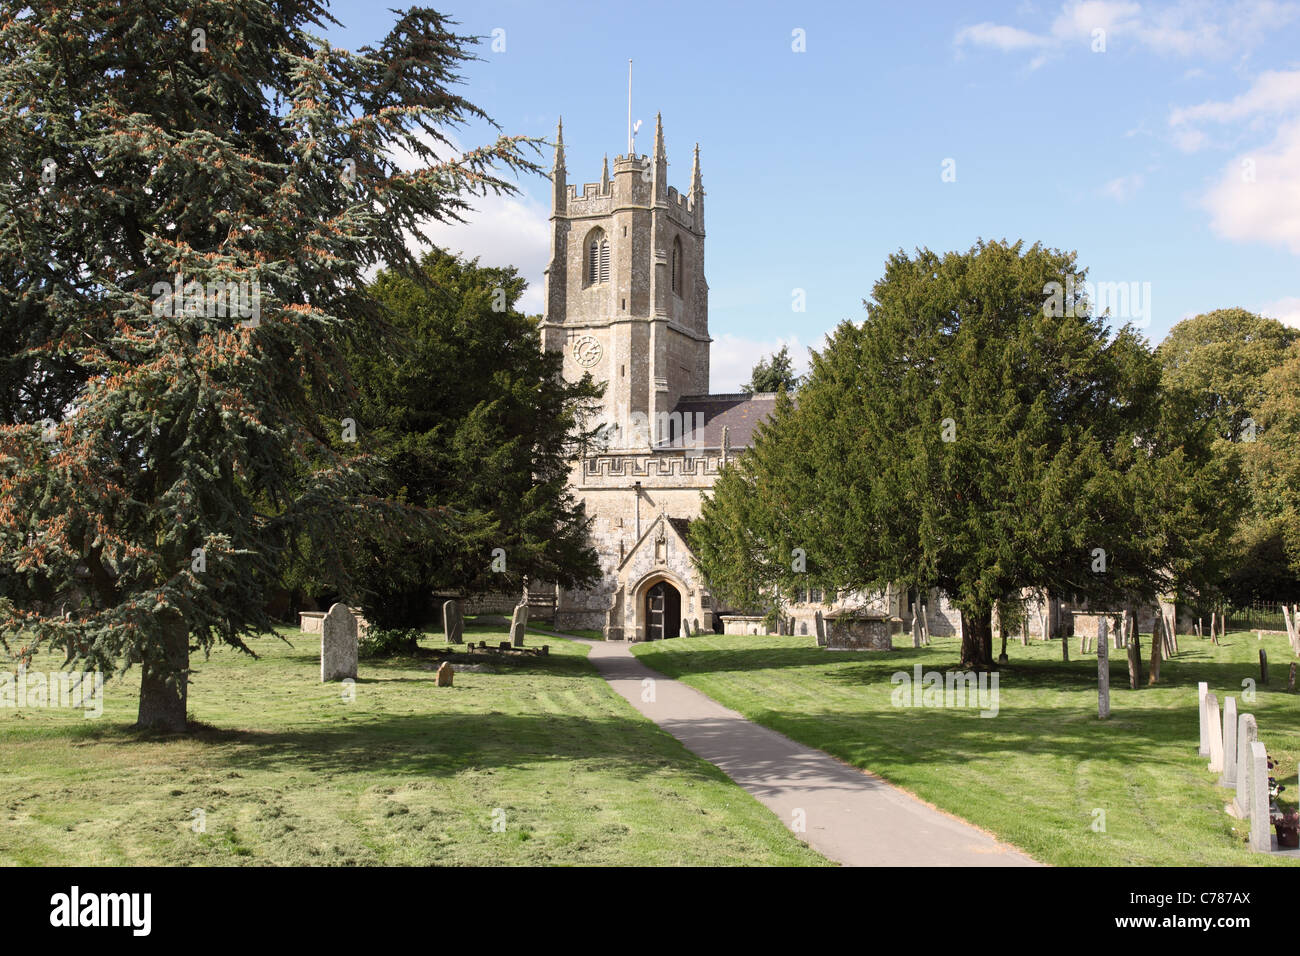 The church of St James, Avebury, Wiltshire, England, UK Stock Photo